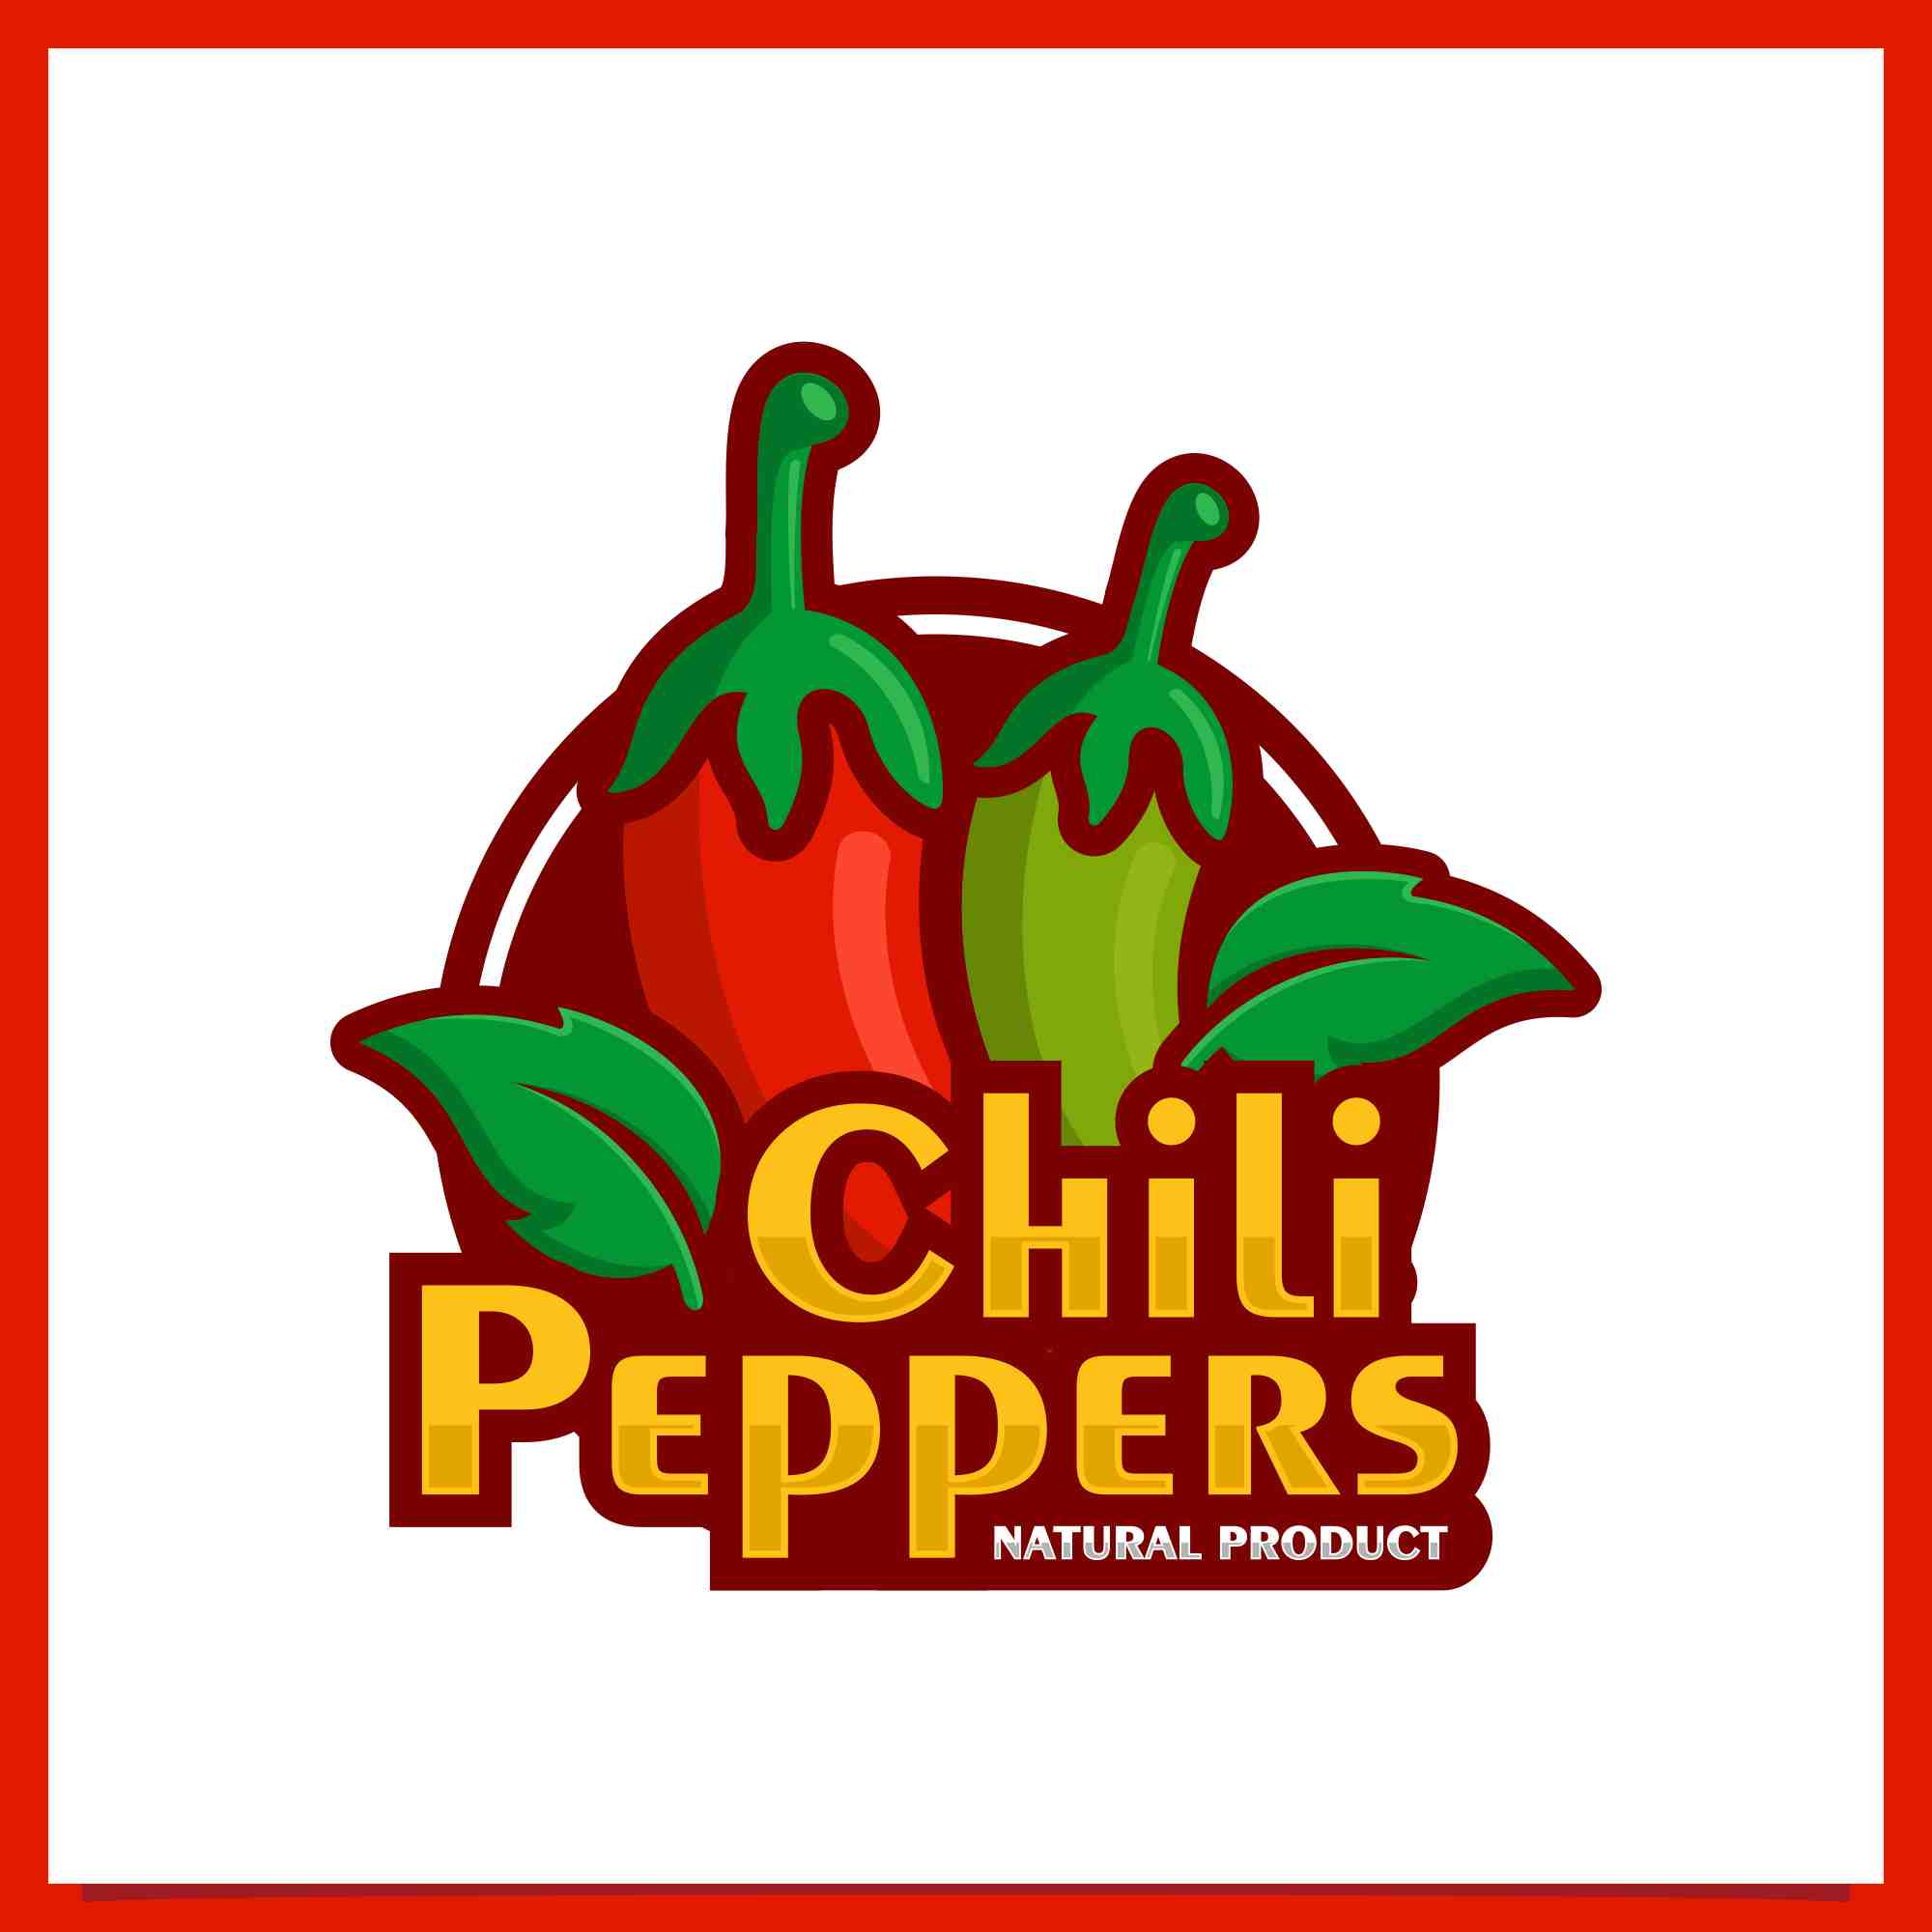 chili pepper badge logo design 4 680